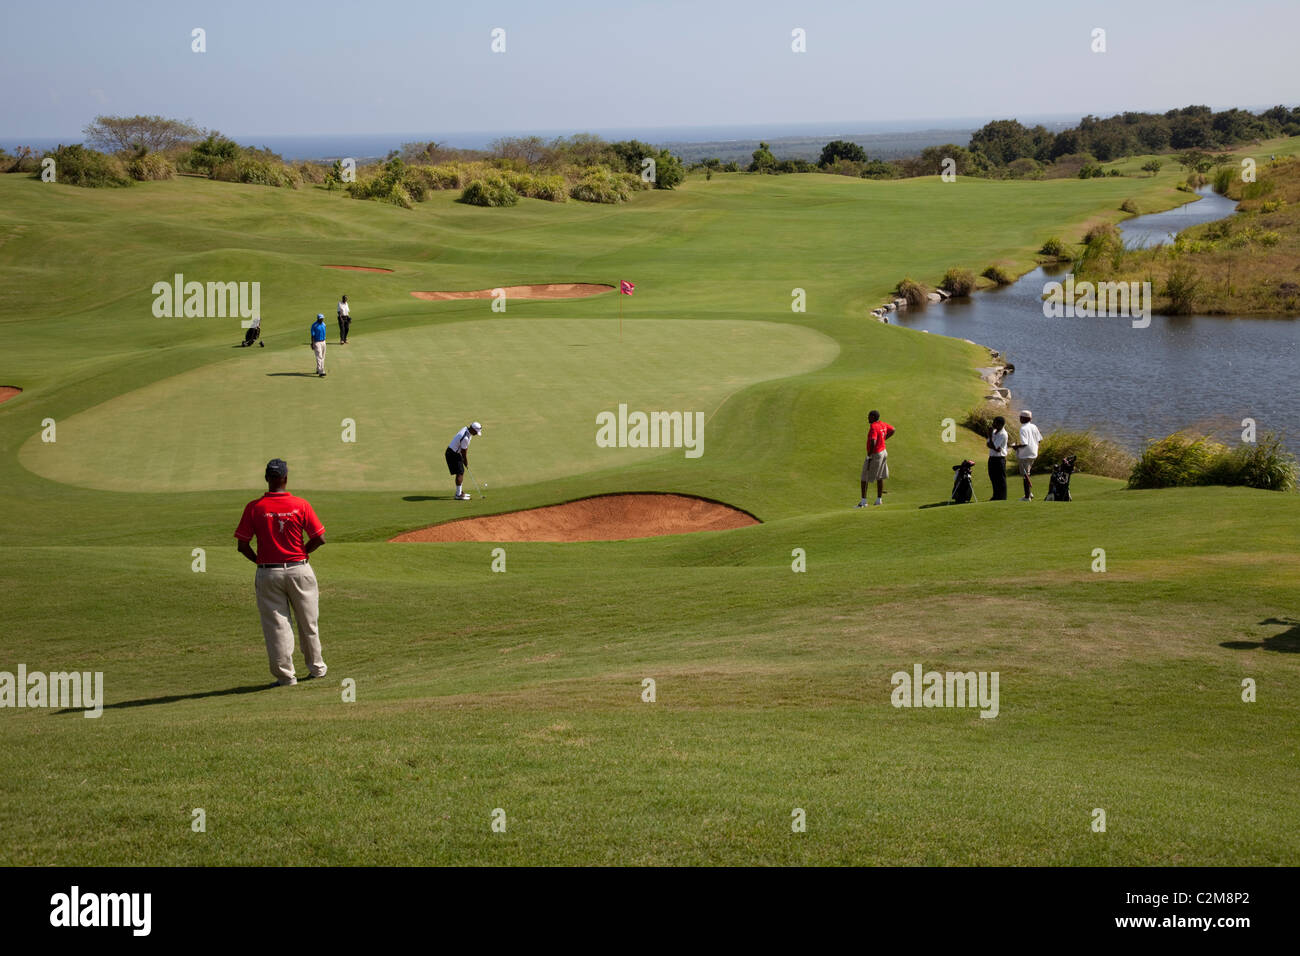 Golfers on green Virgin Atlantic Golf Tournament International Golf Course Vipingo  Ridge Mombasa Kenya Stock Photo - Alamy